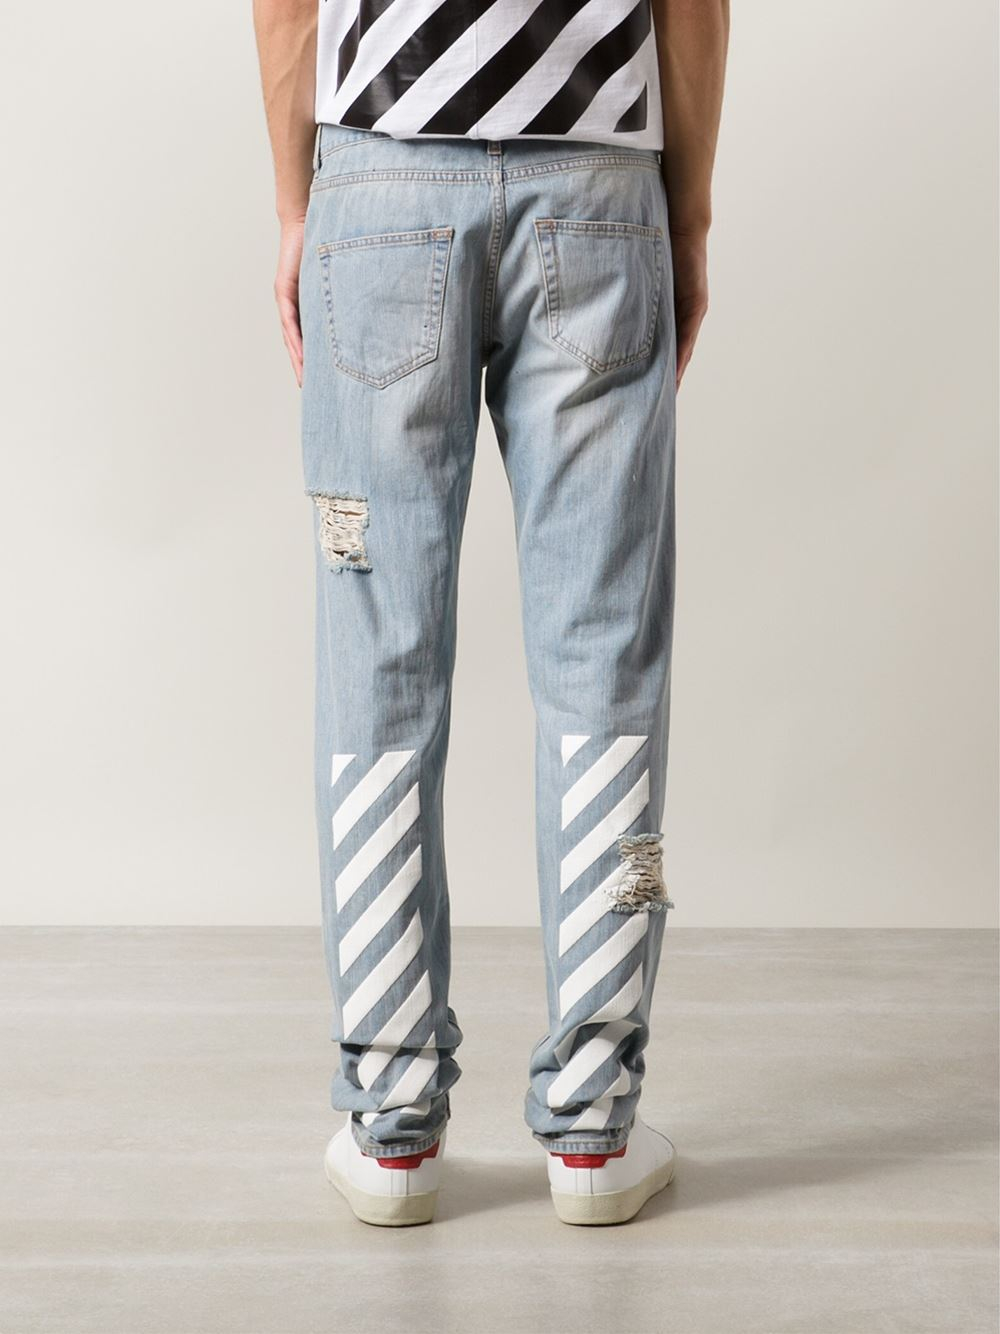 Off White Striped Jeans Top Sellers, 55% OFF | www.cernebrasil.com